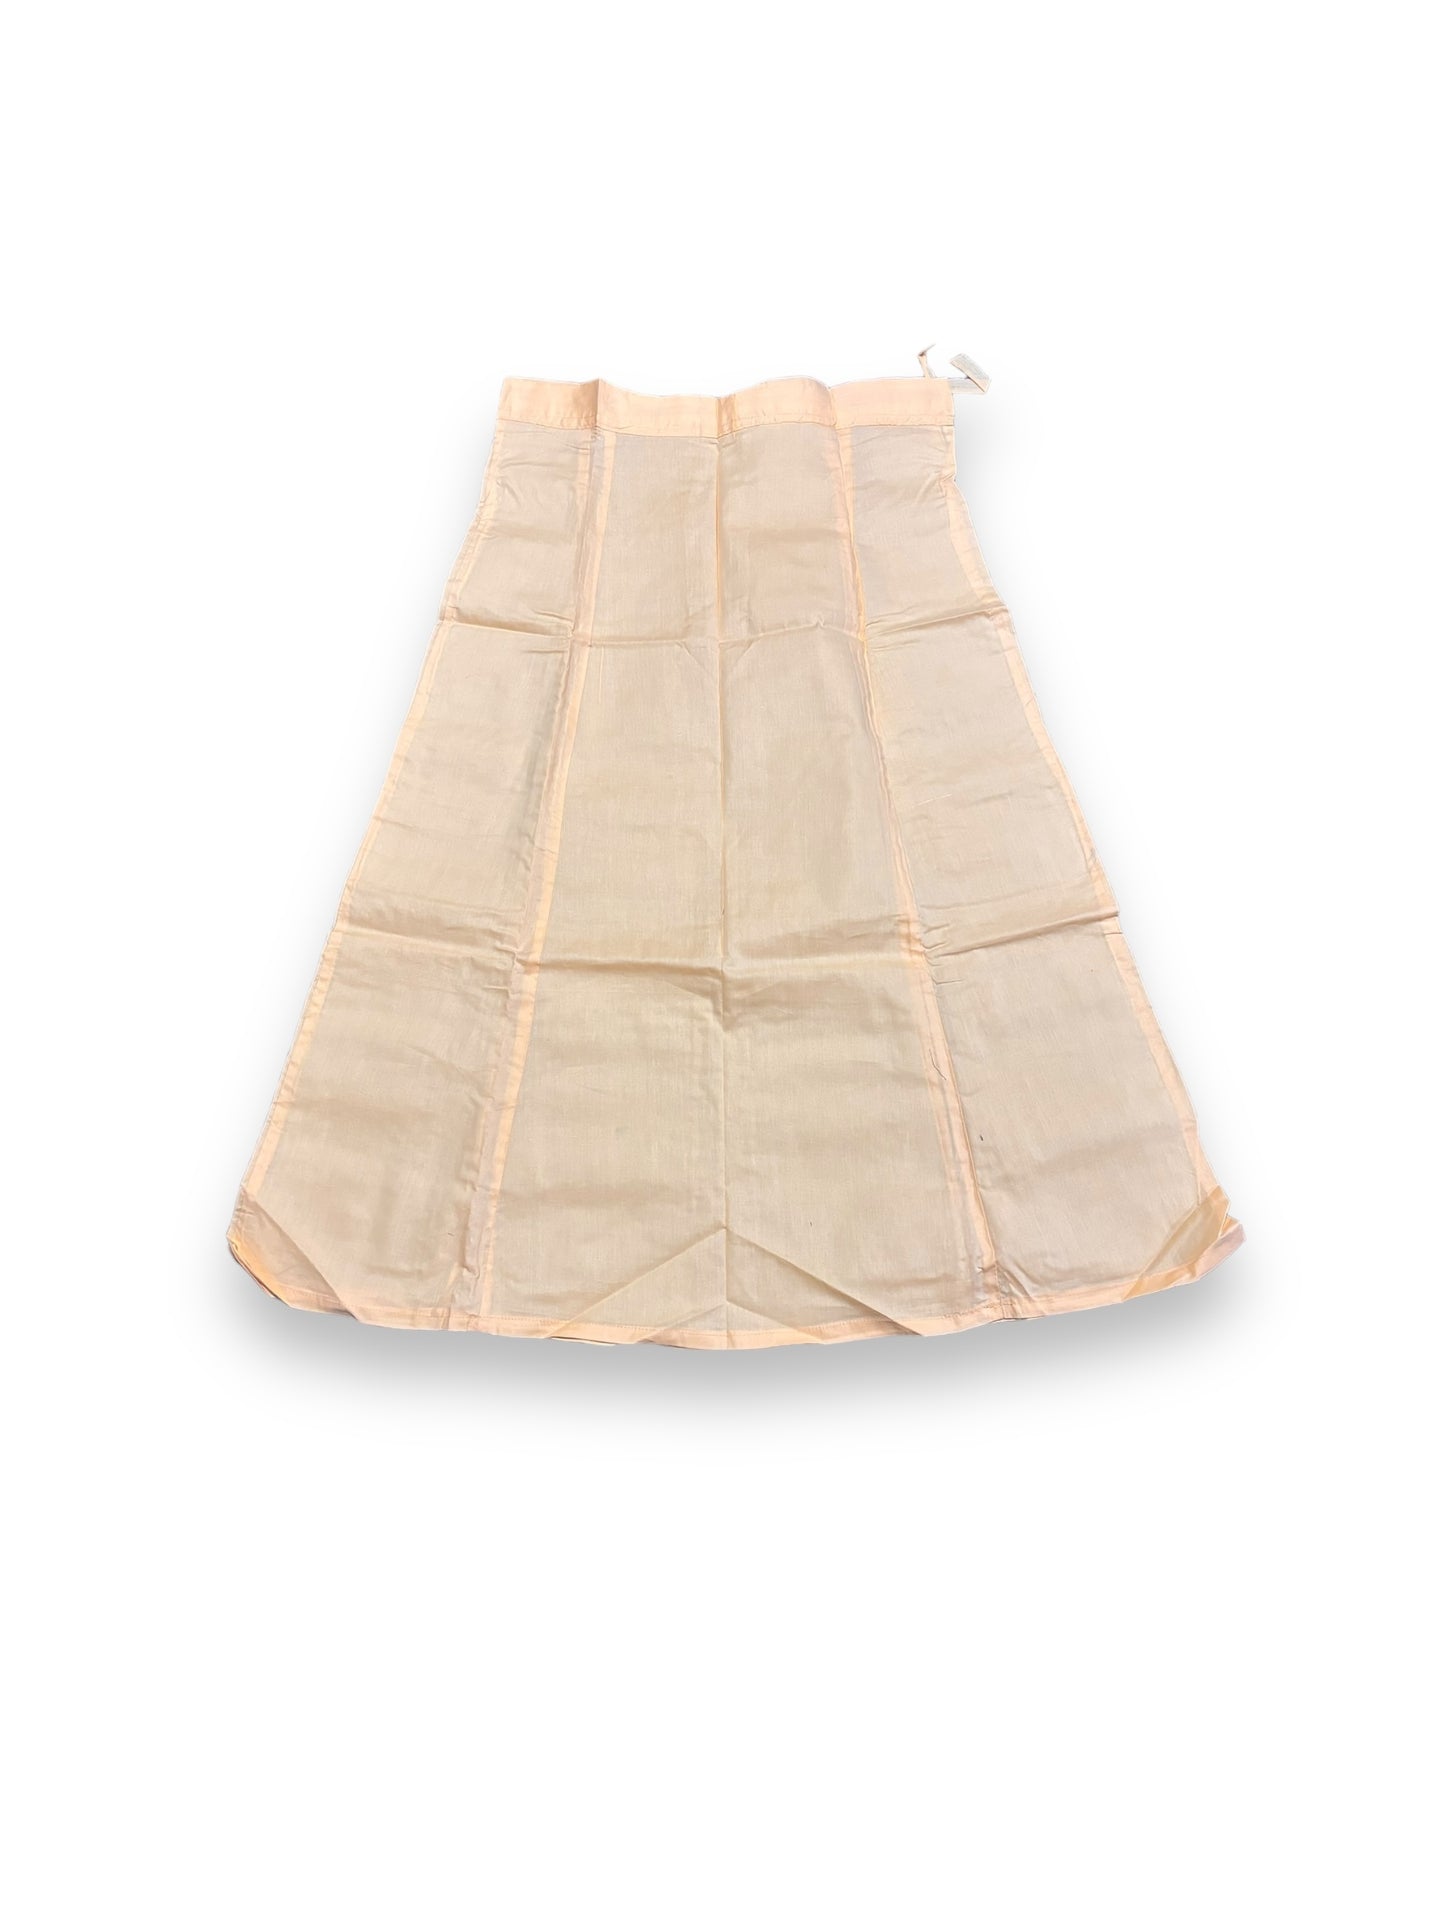 Essential Plain Cotton Petticoat for Women - 214